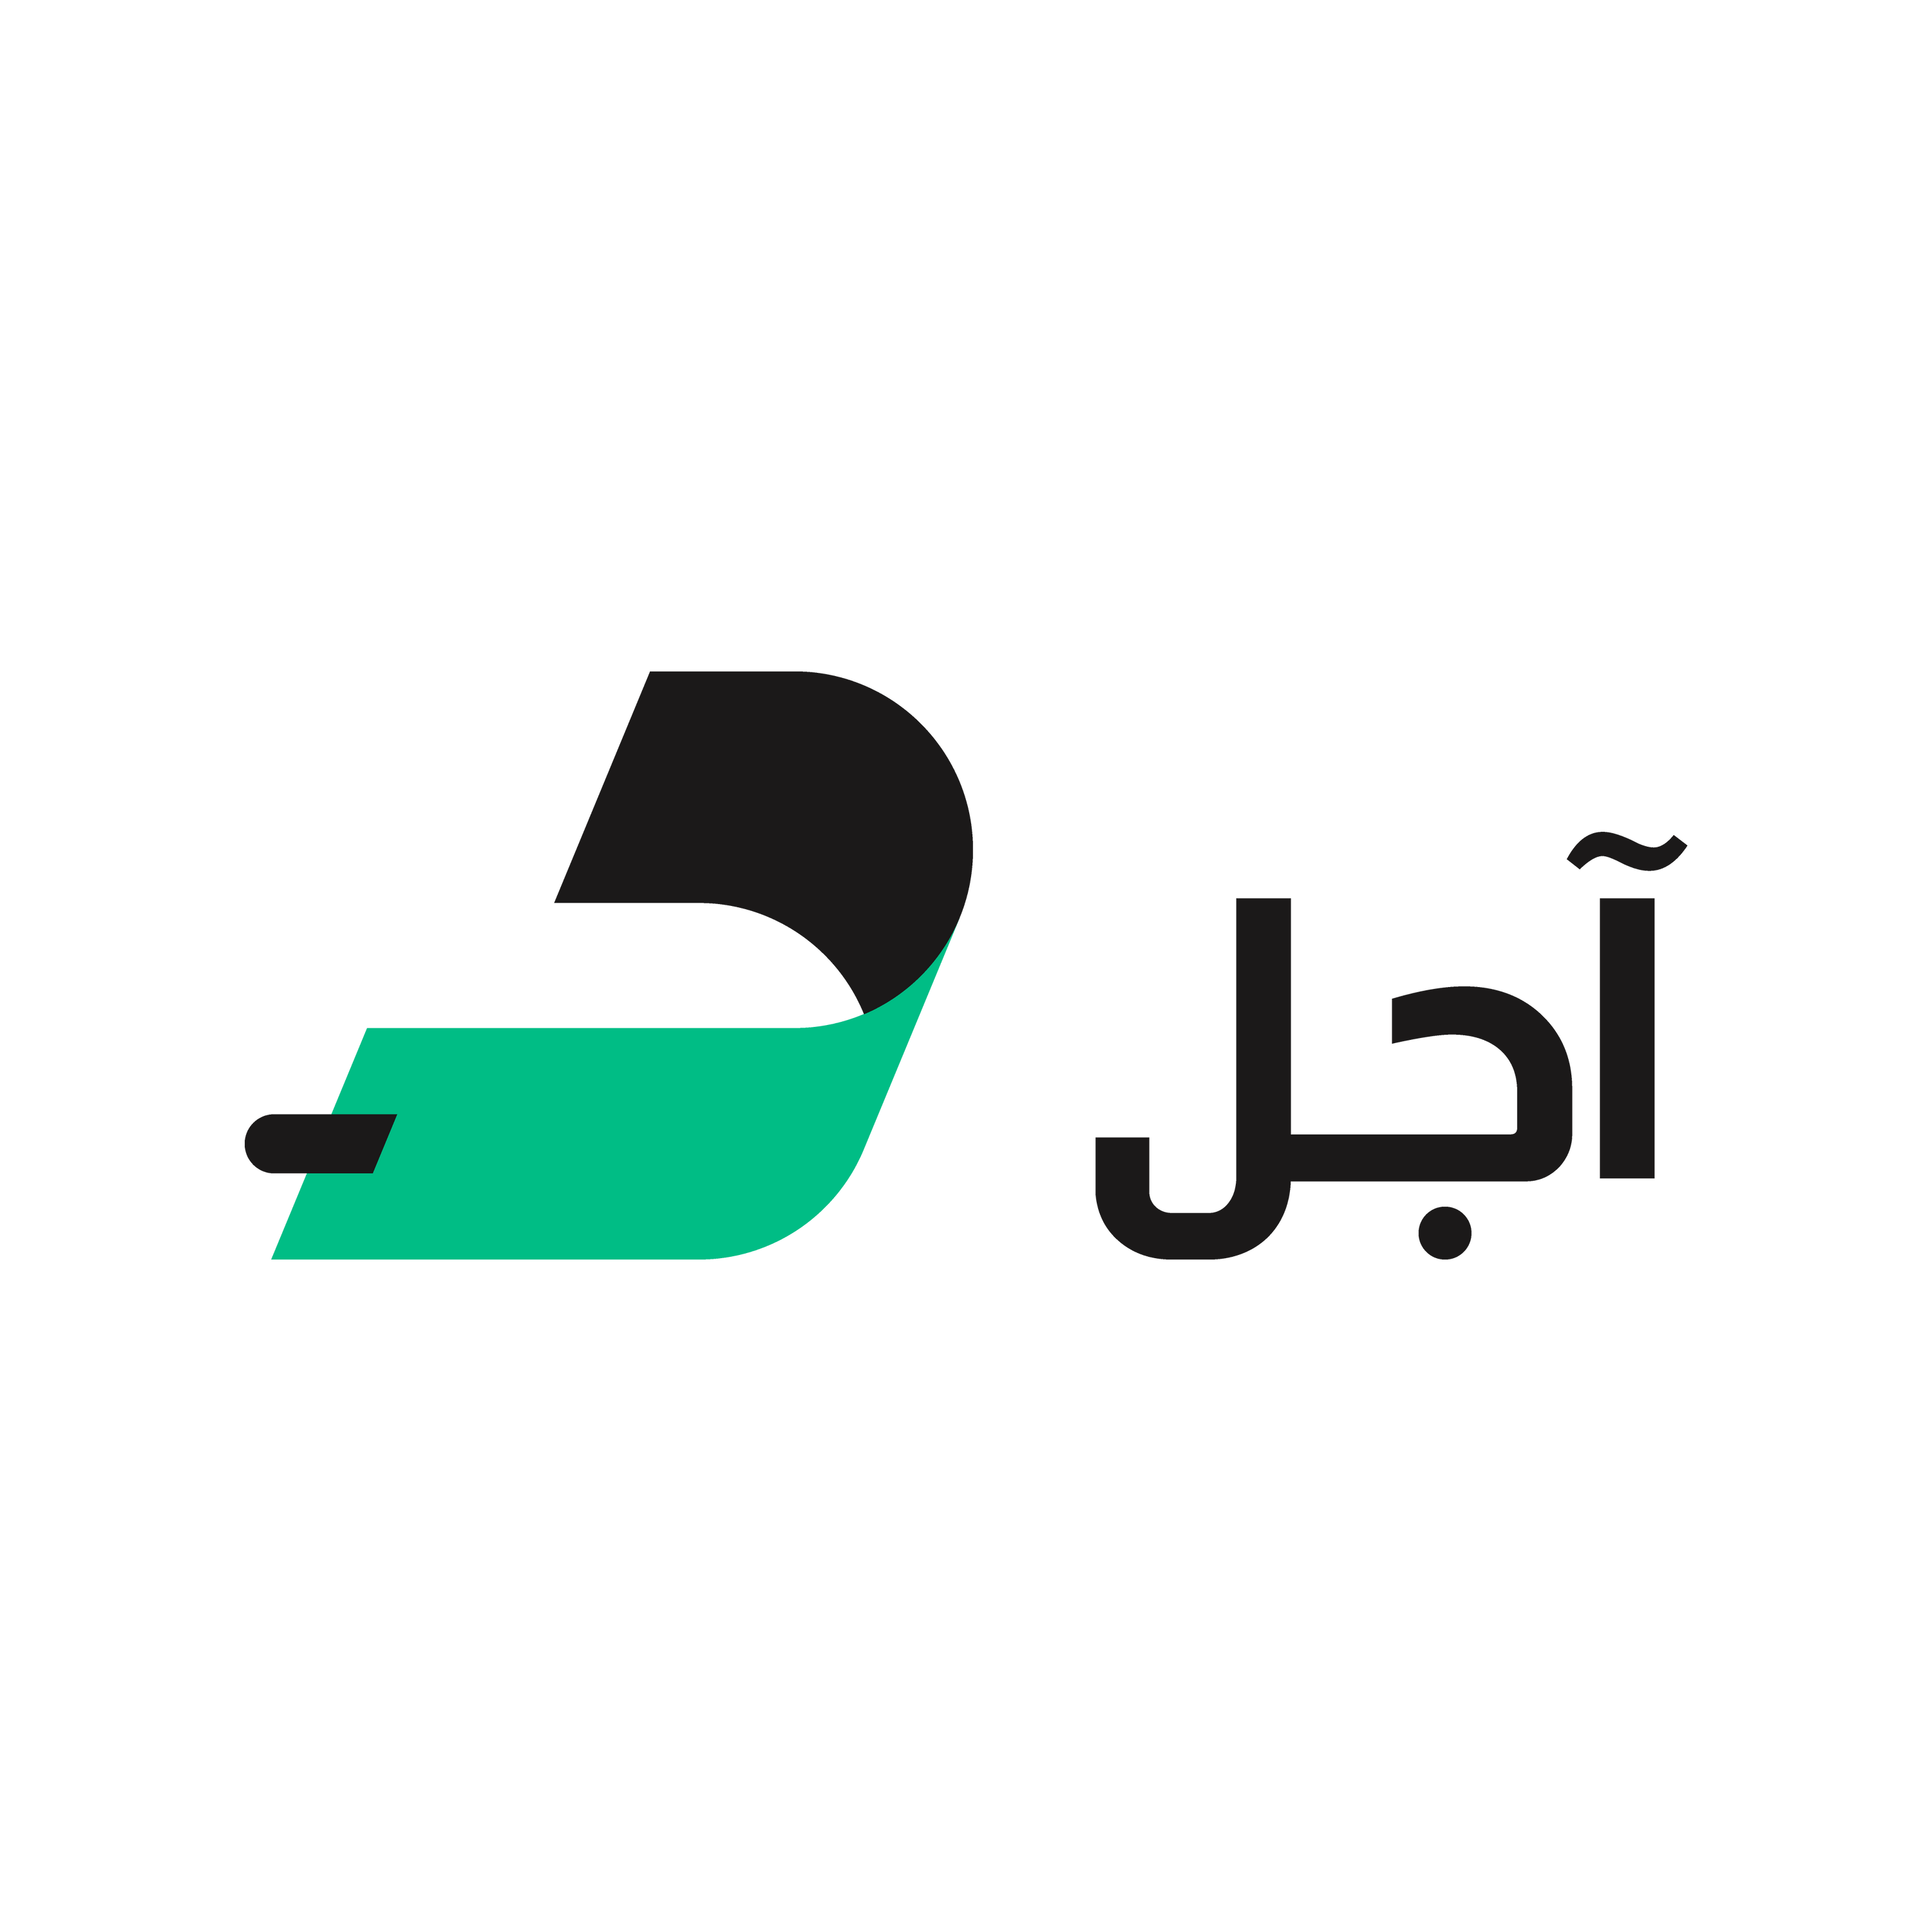 green n black logo